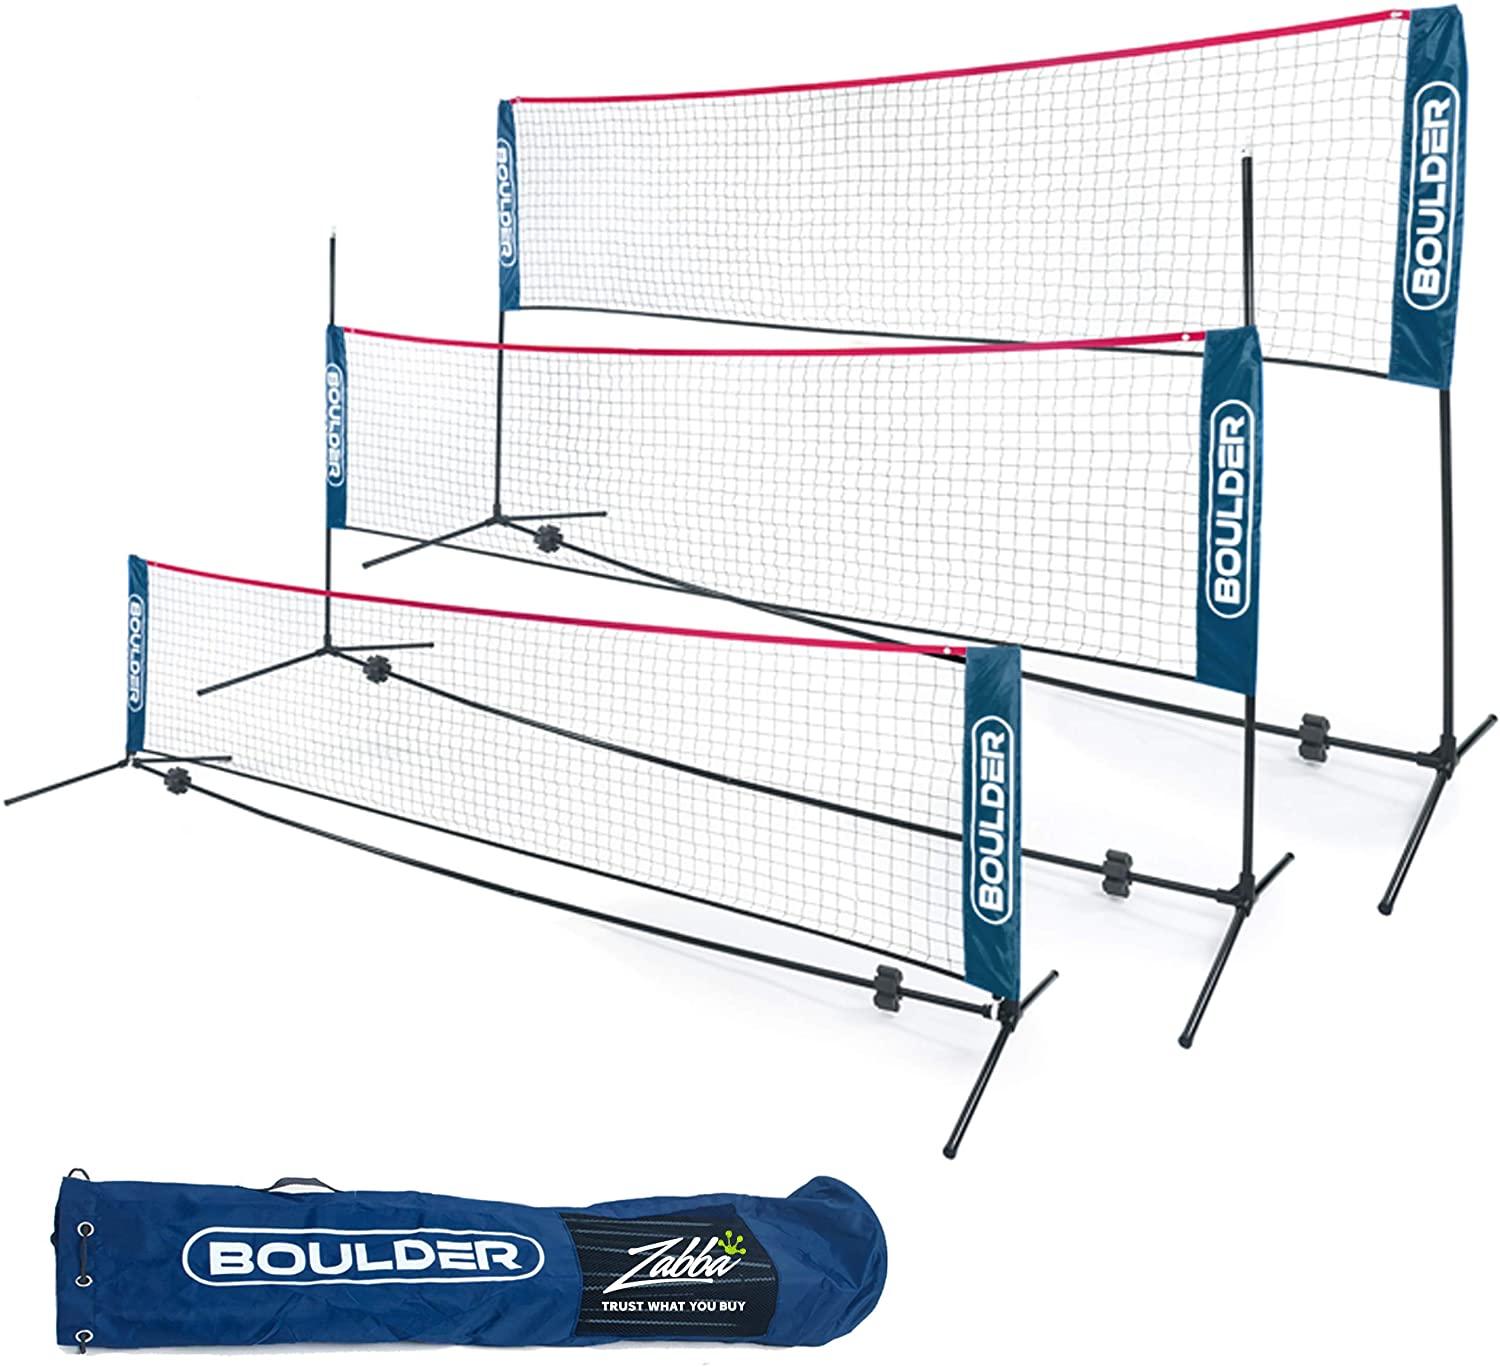 Boulder Portable Badminton Net Set for $34.99 Shipped